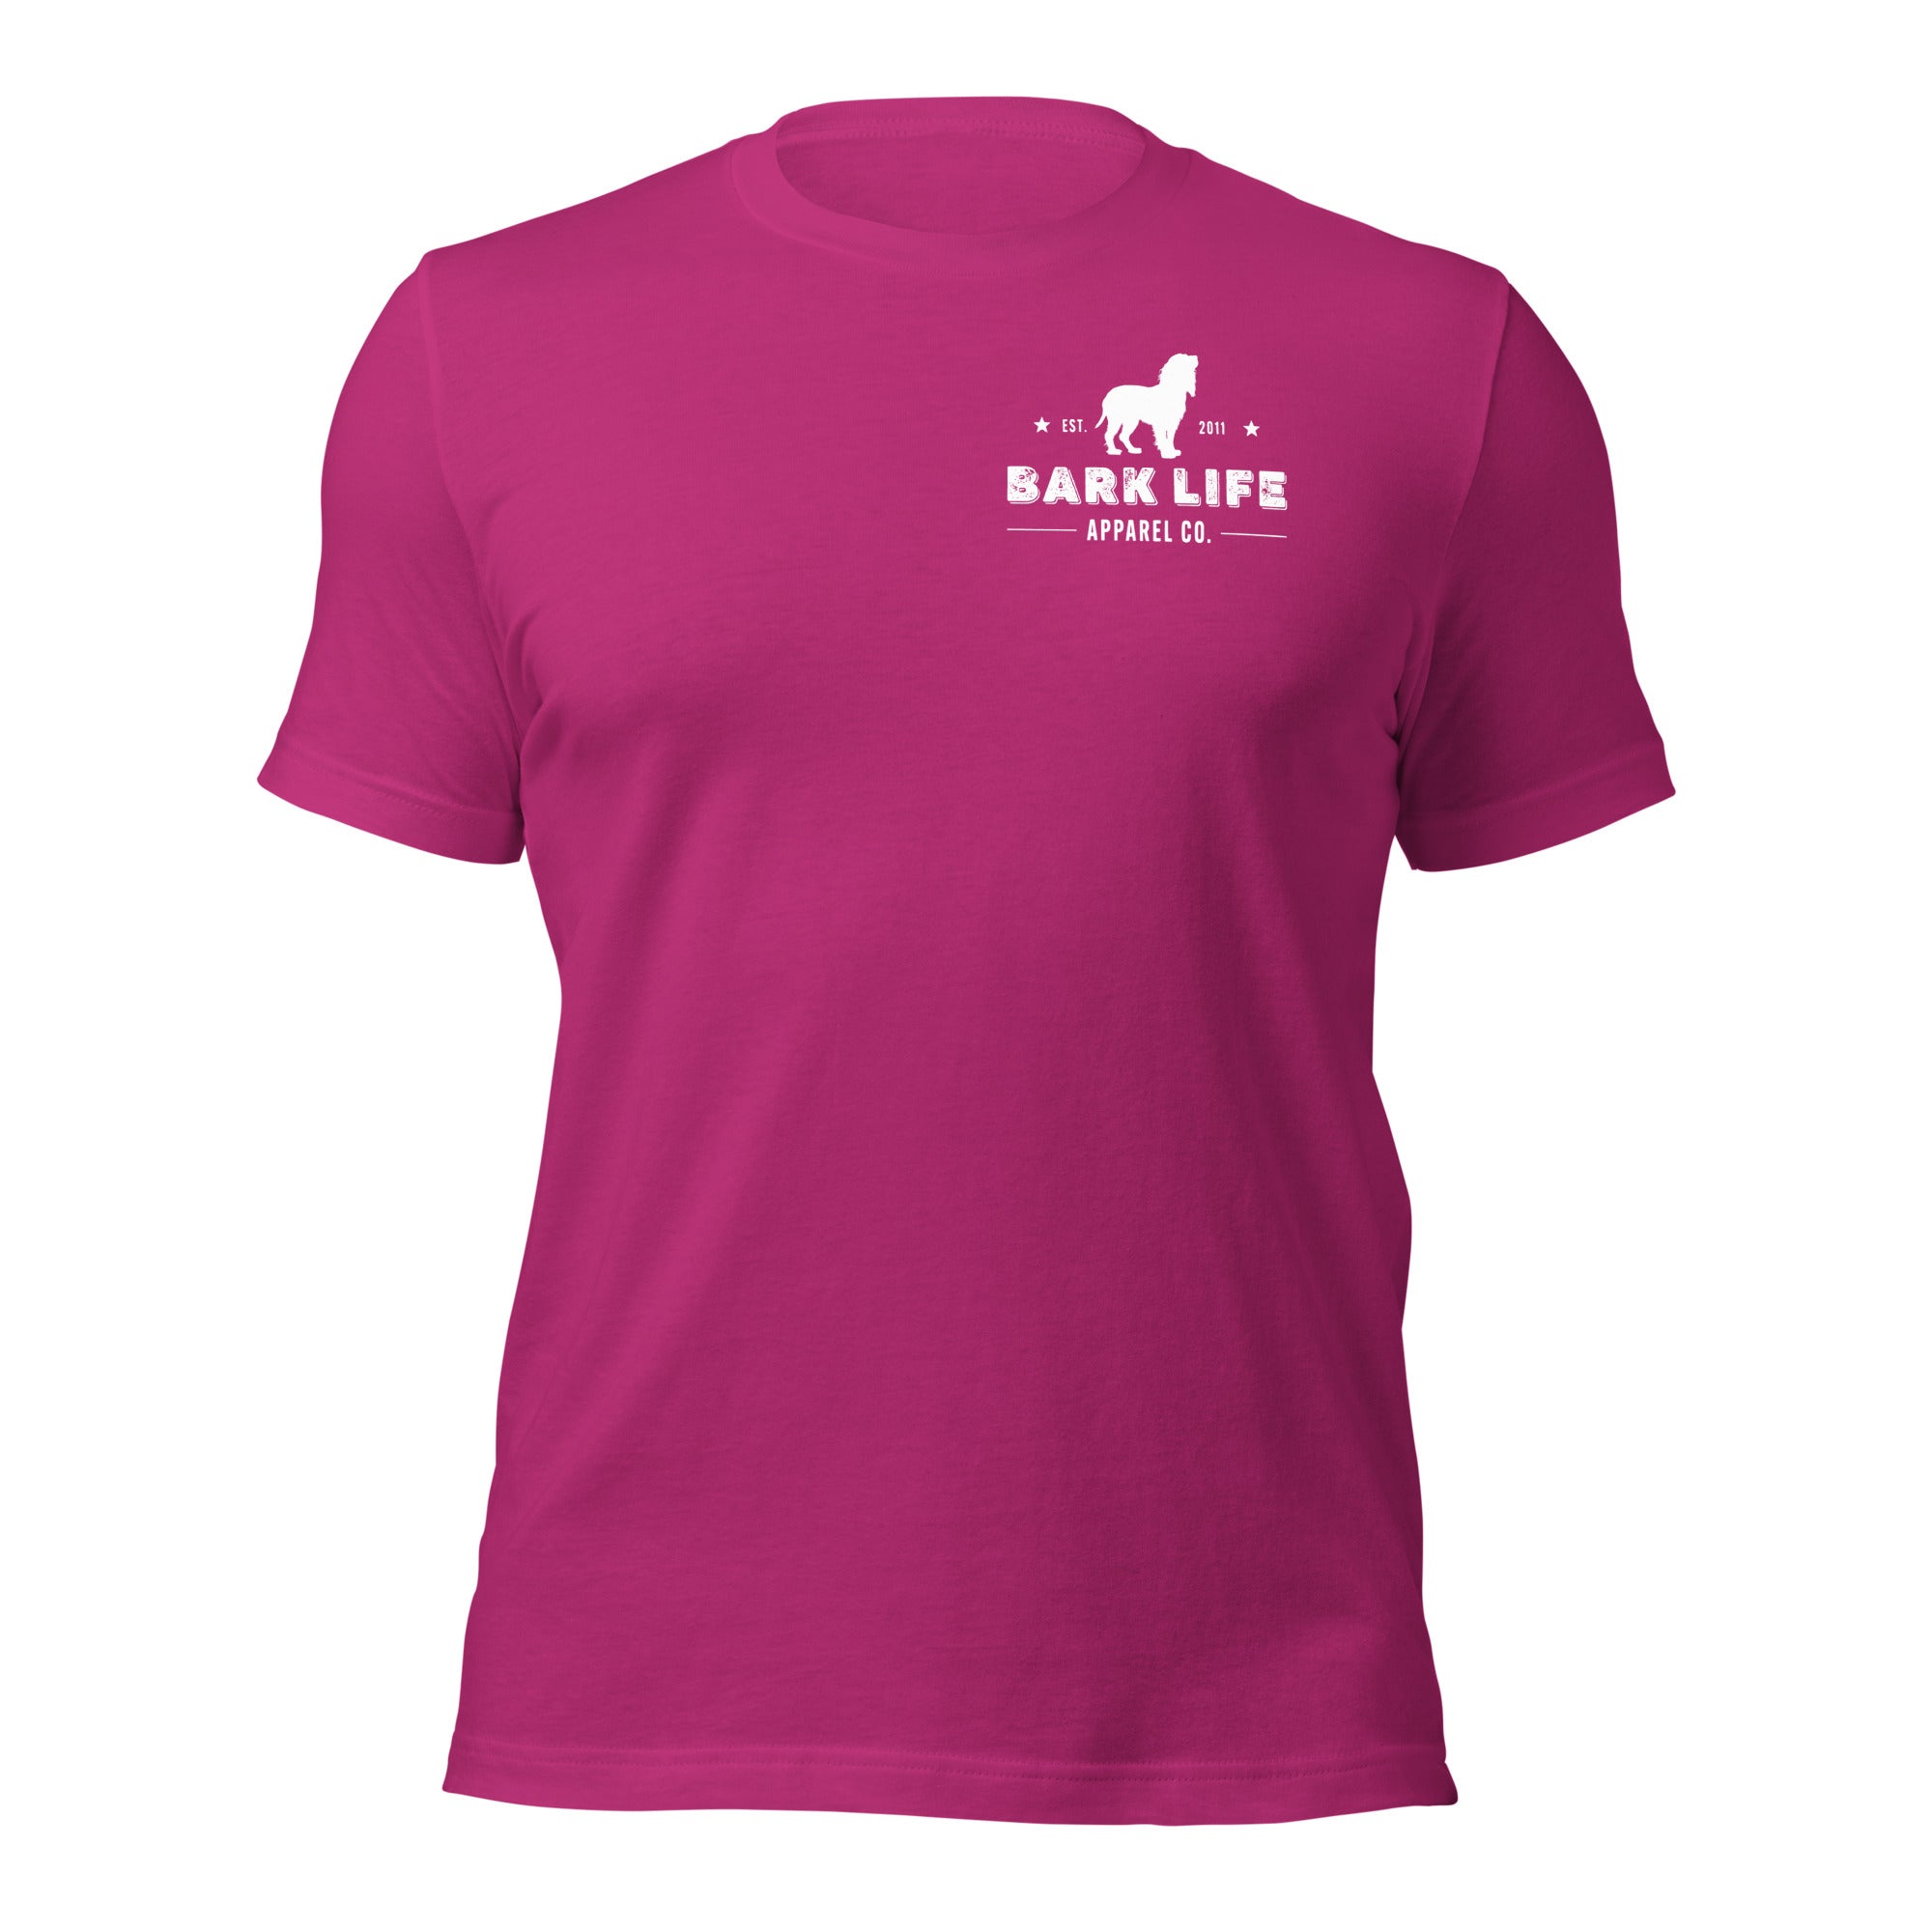 Boykin Spaniel - Short Sleeve Cotton Tee  Shirt